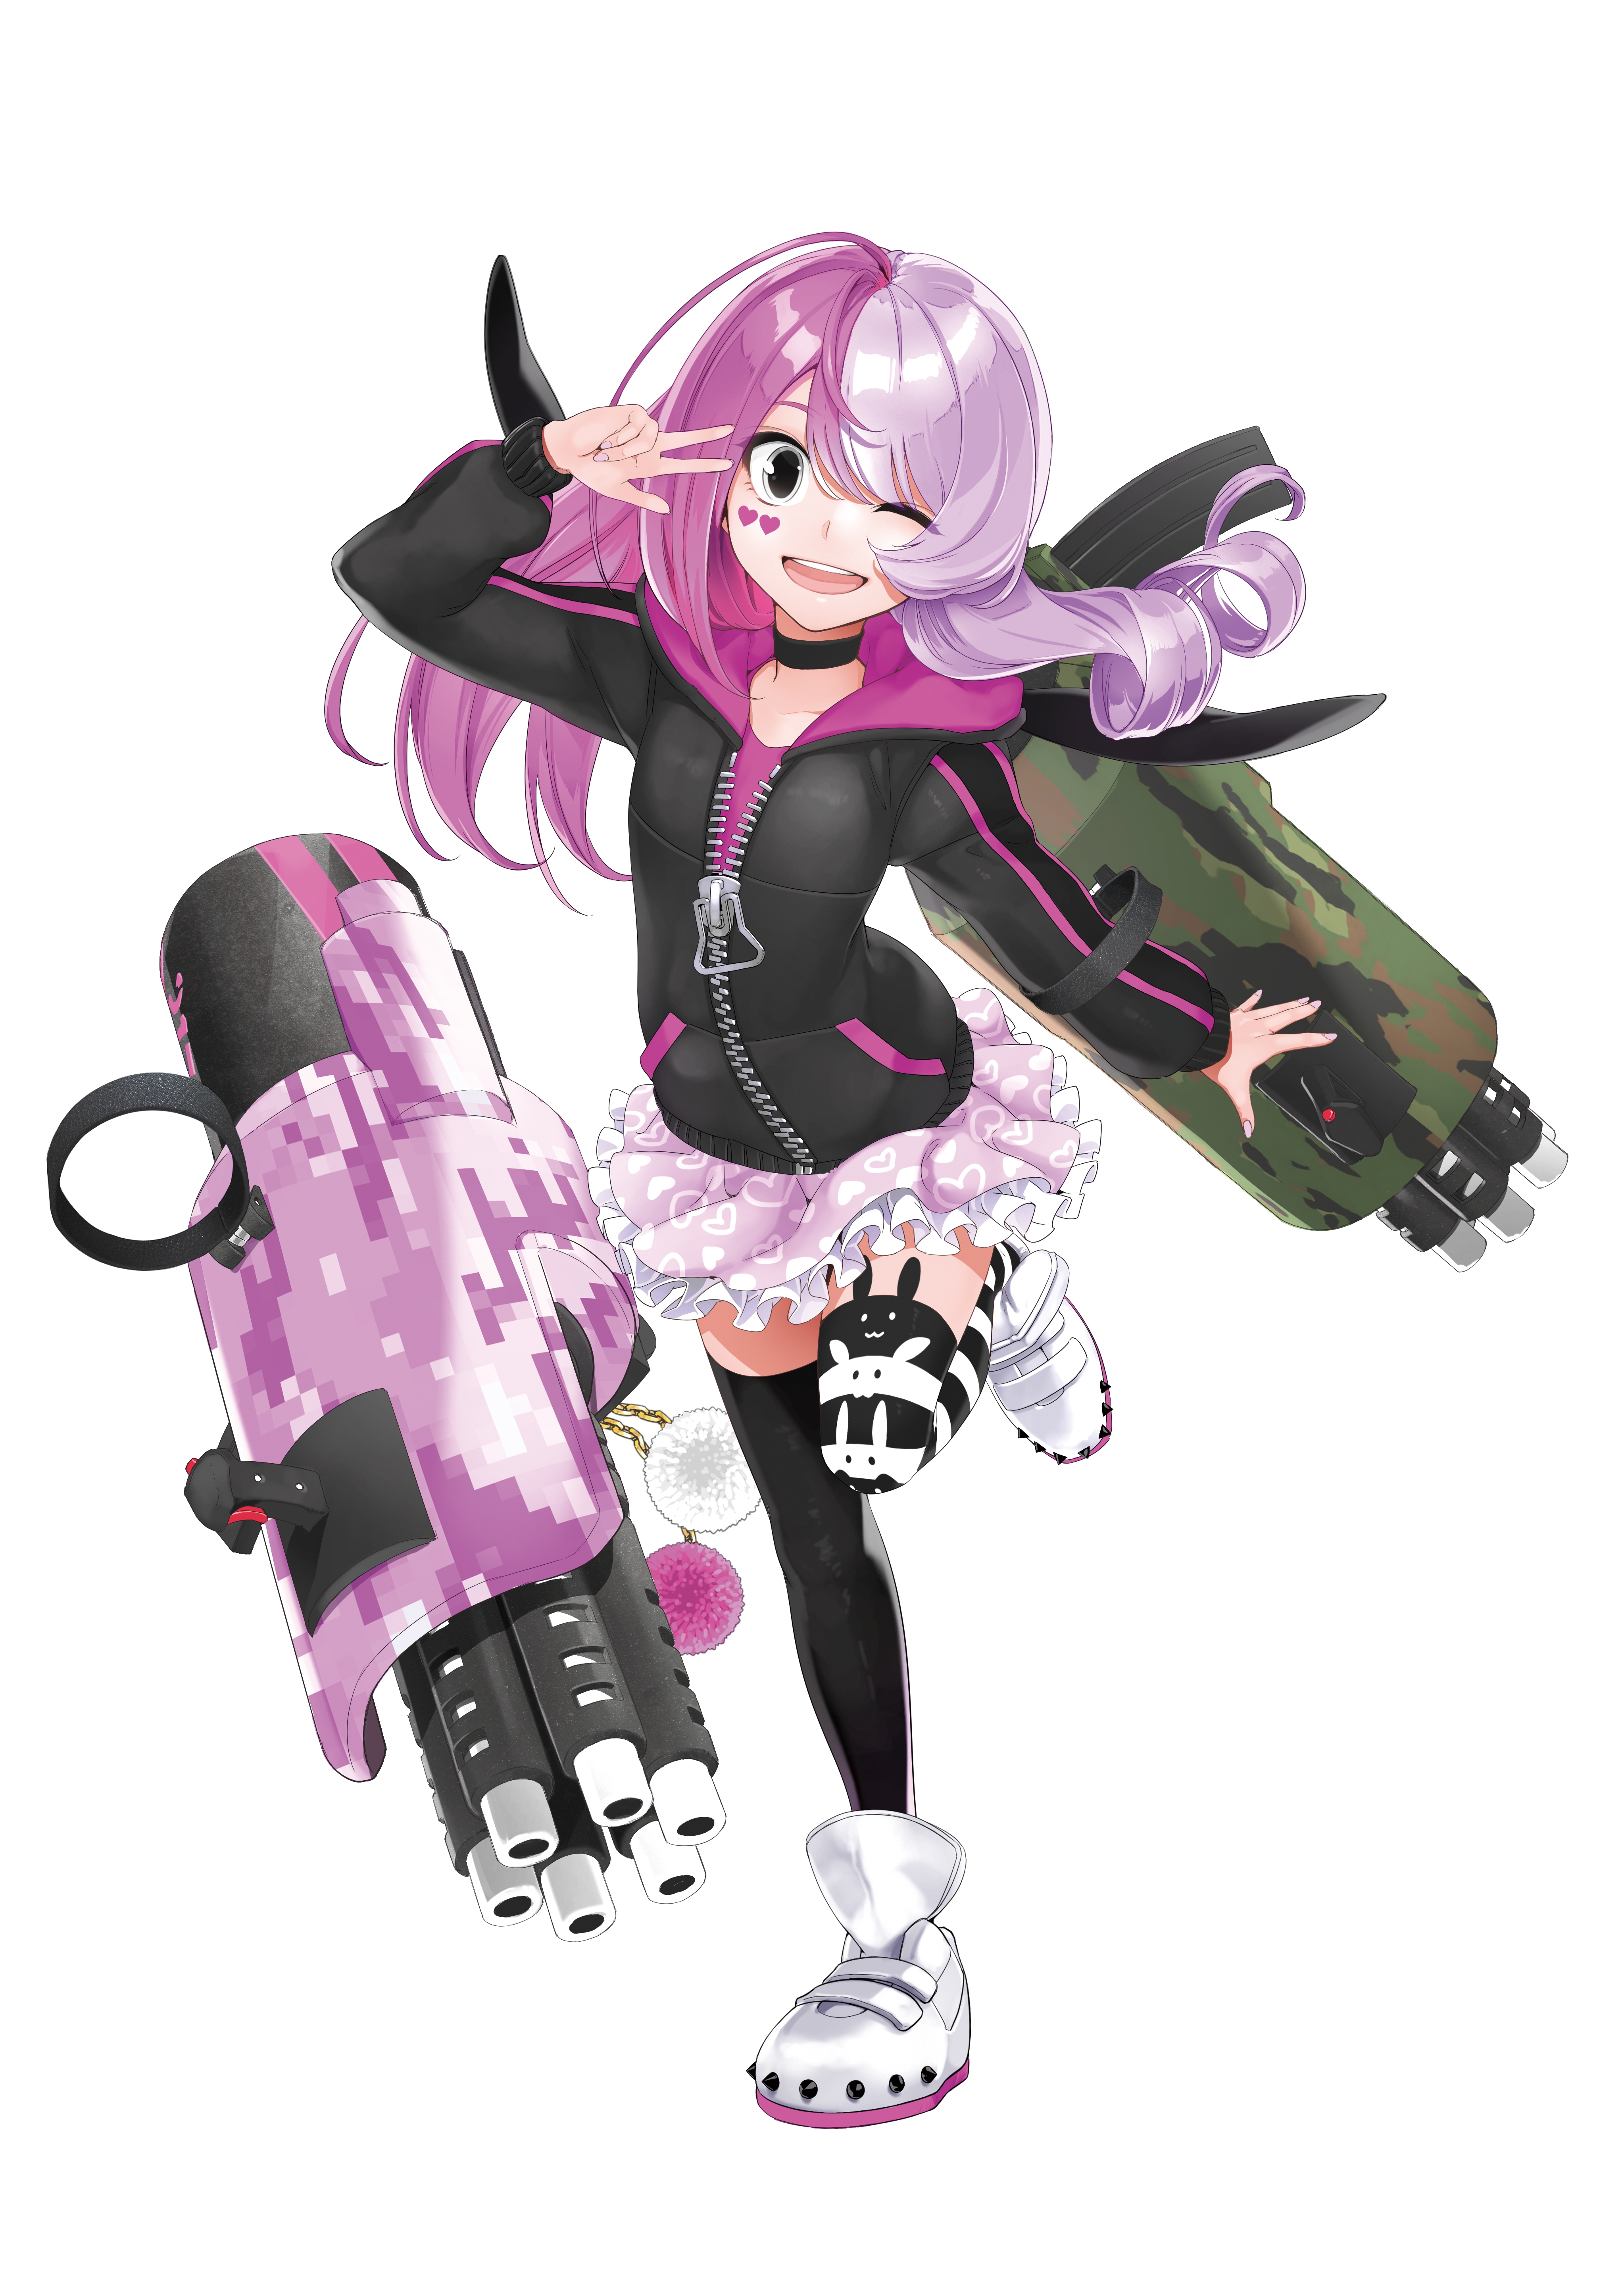 Anime 4093x5787 thigh-highs Gatling gun weapon anime girls